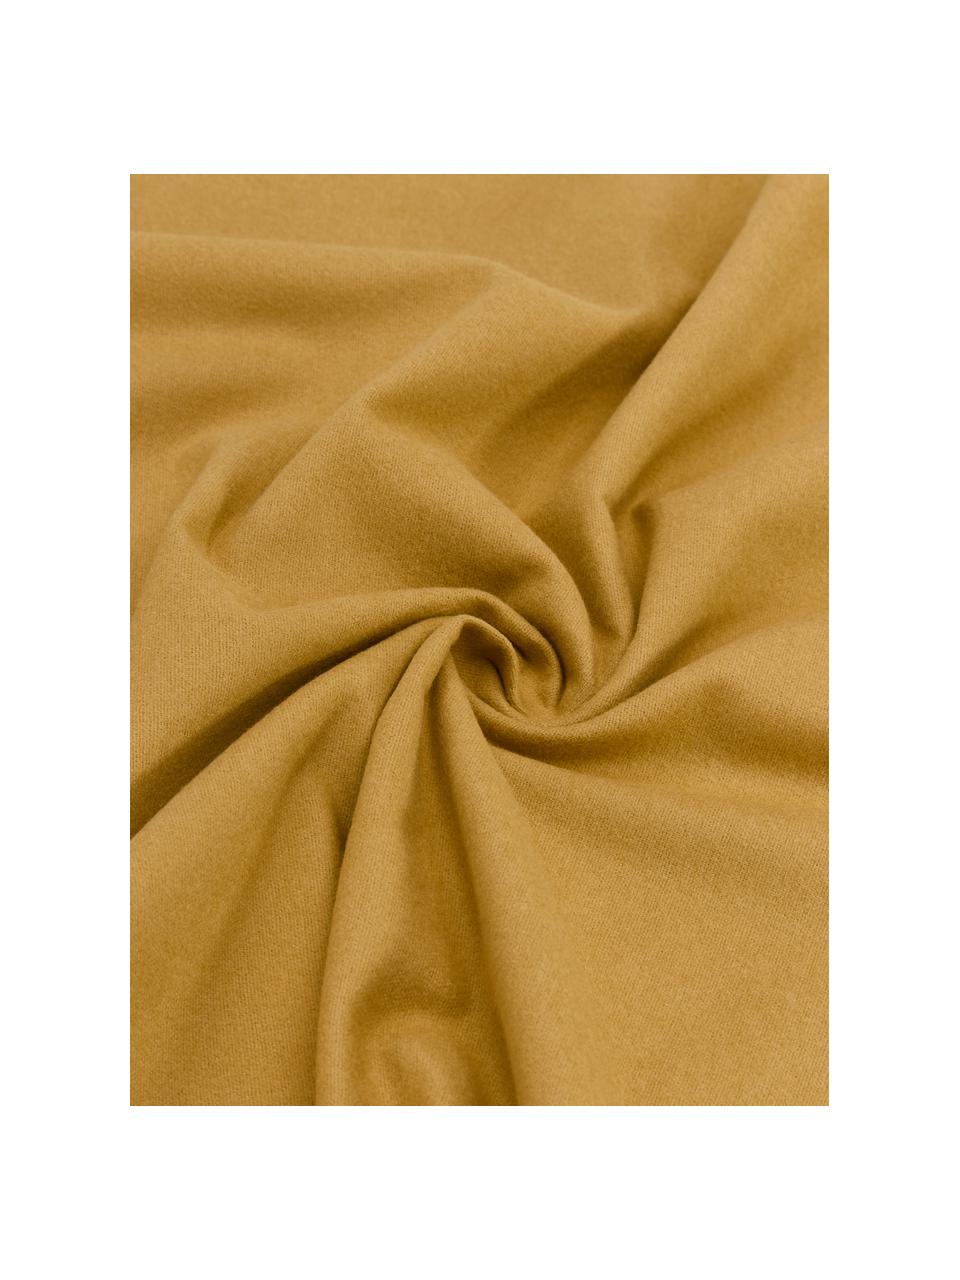 Flanell-Kissenbezüge Biba in Senfgelb, 2 Stück, Webart: Flanell Flanell ist ein k, Gelb, B 40 x L 80 cm